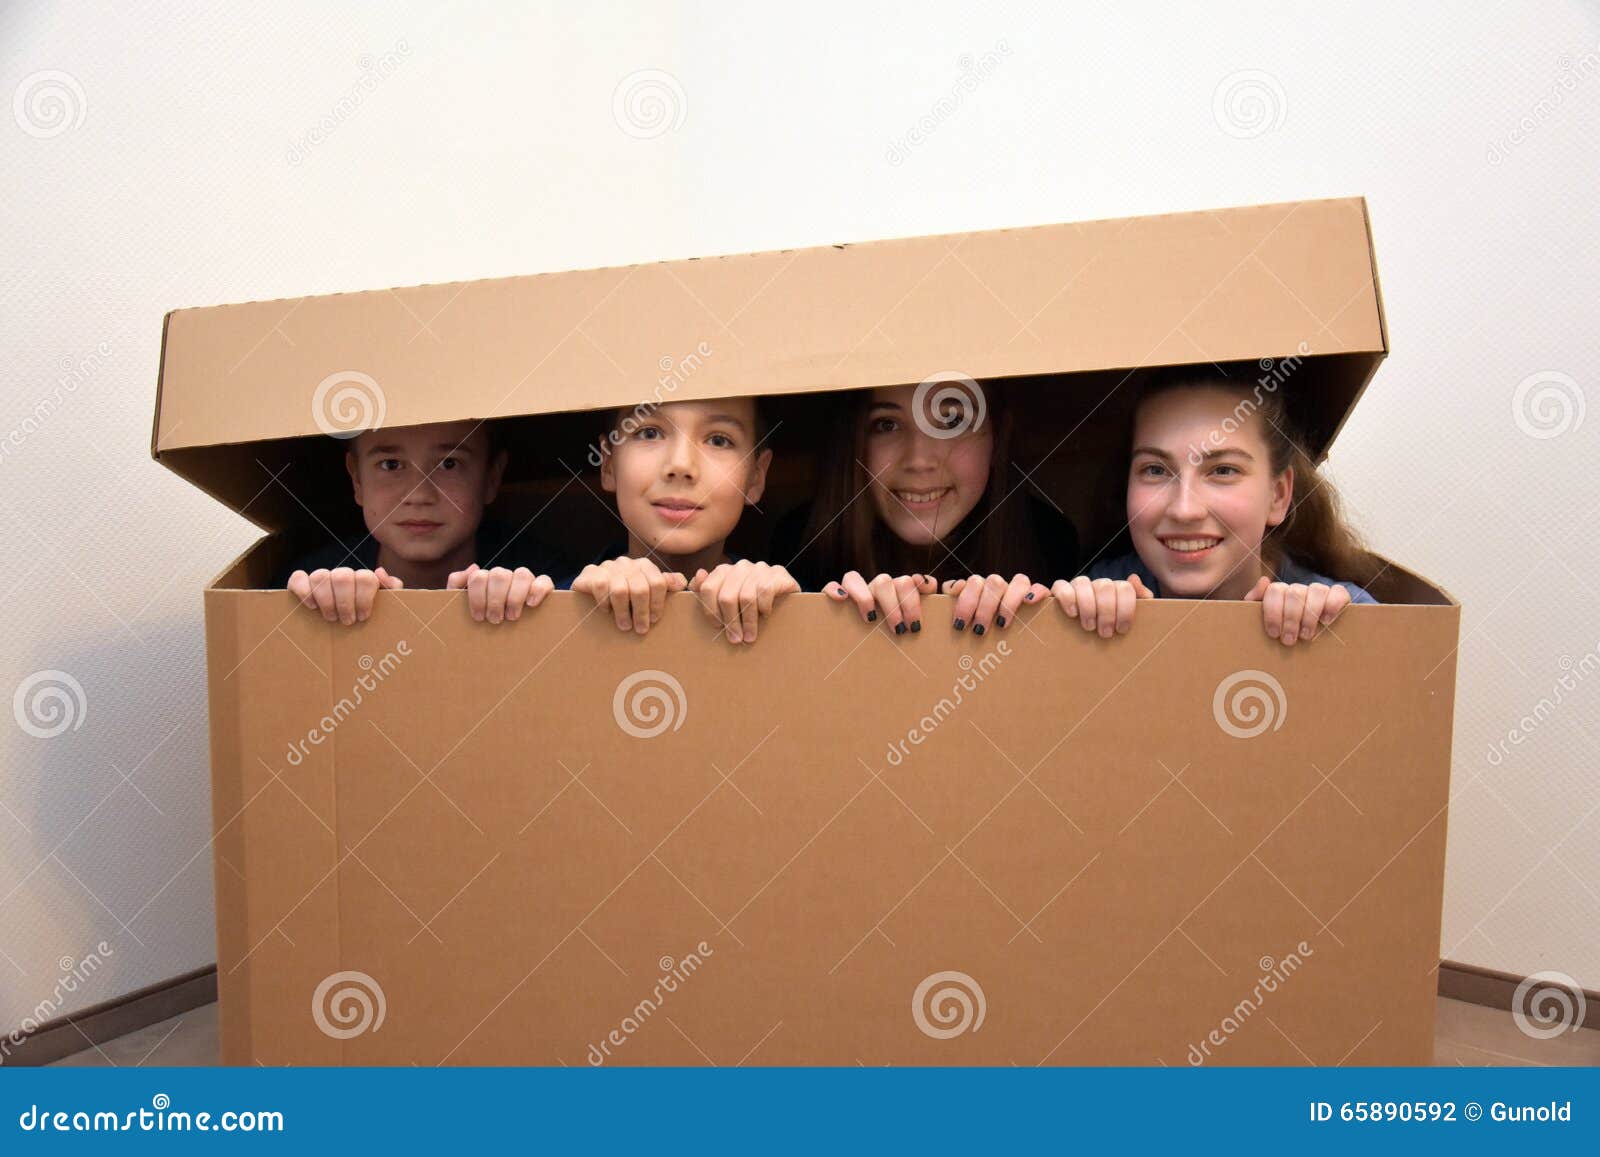 teens hidden in moving box